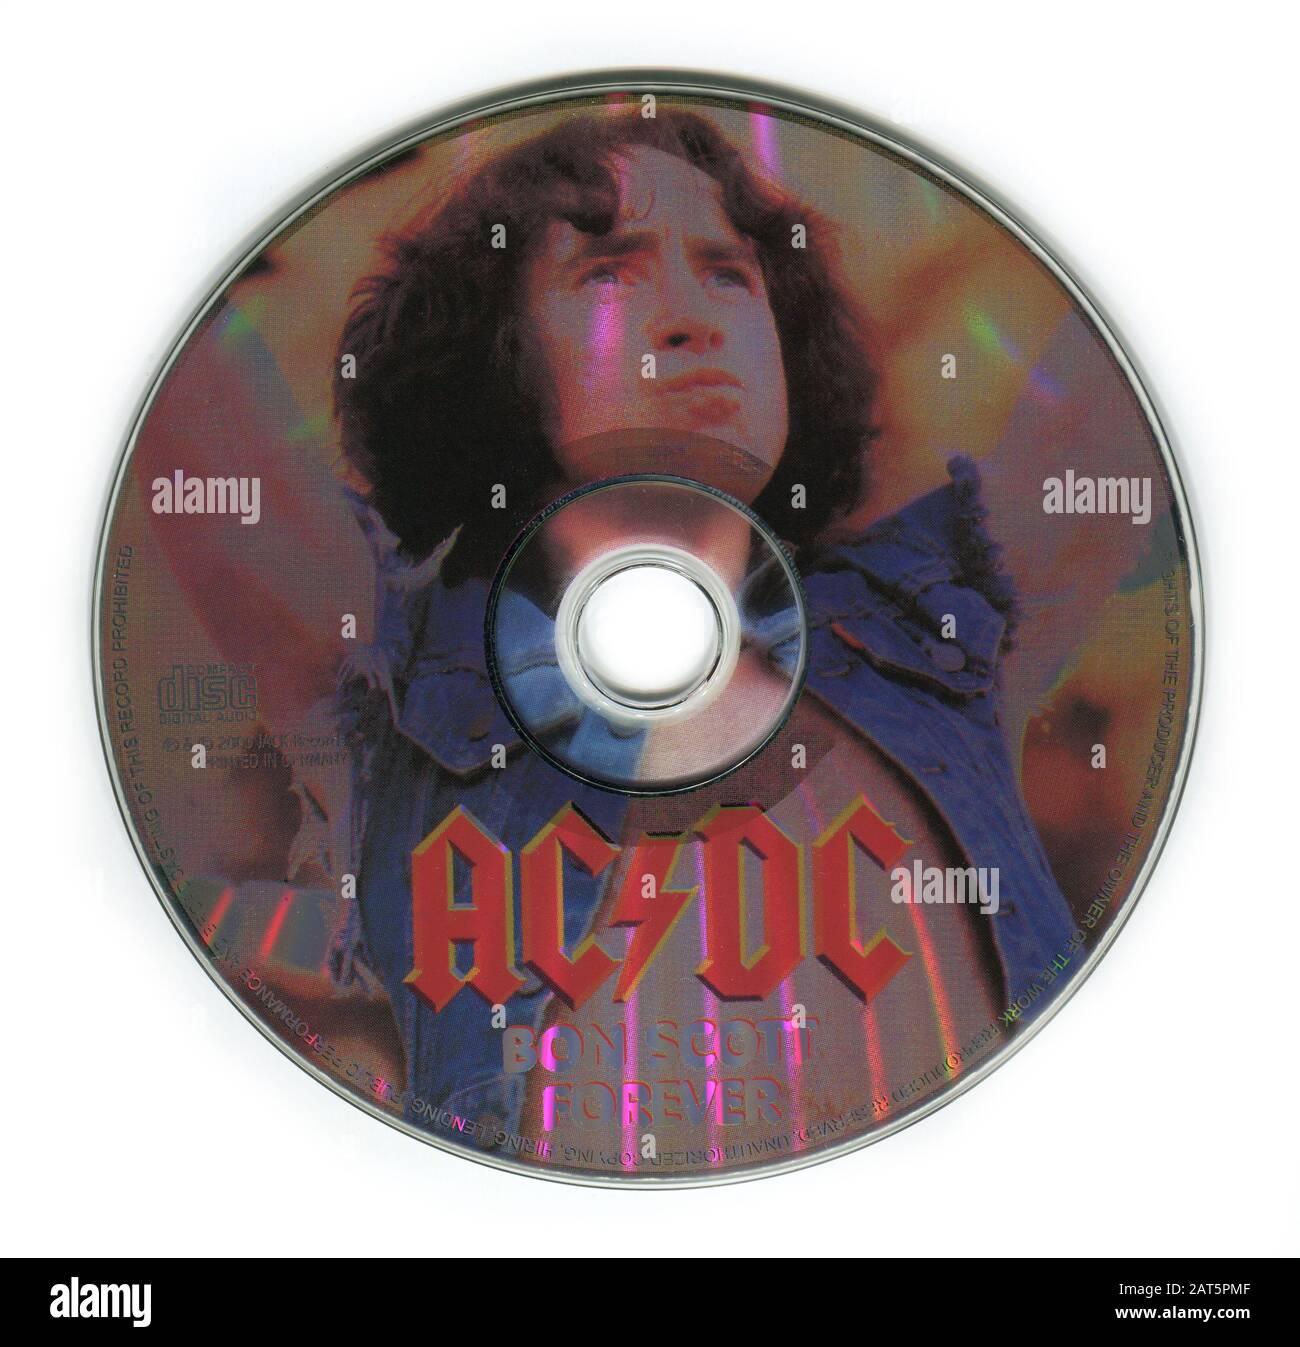 CD: AC/DC 'BON SCOTT FOREVER', released on JACK Records on 2000. Stock Photo